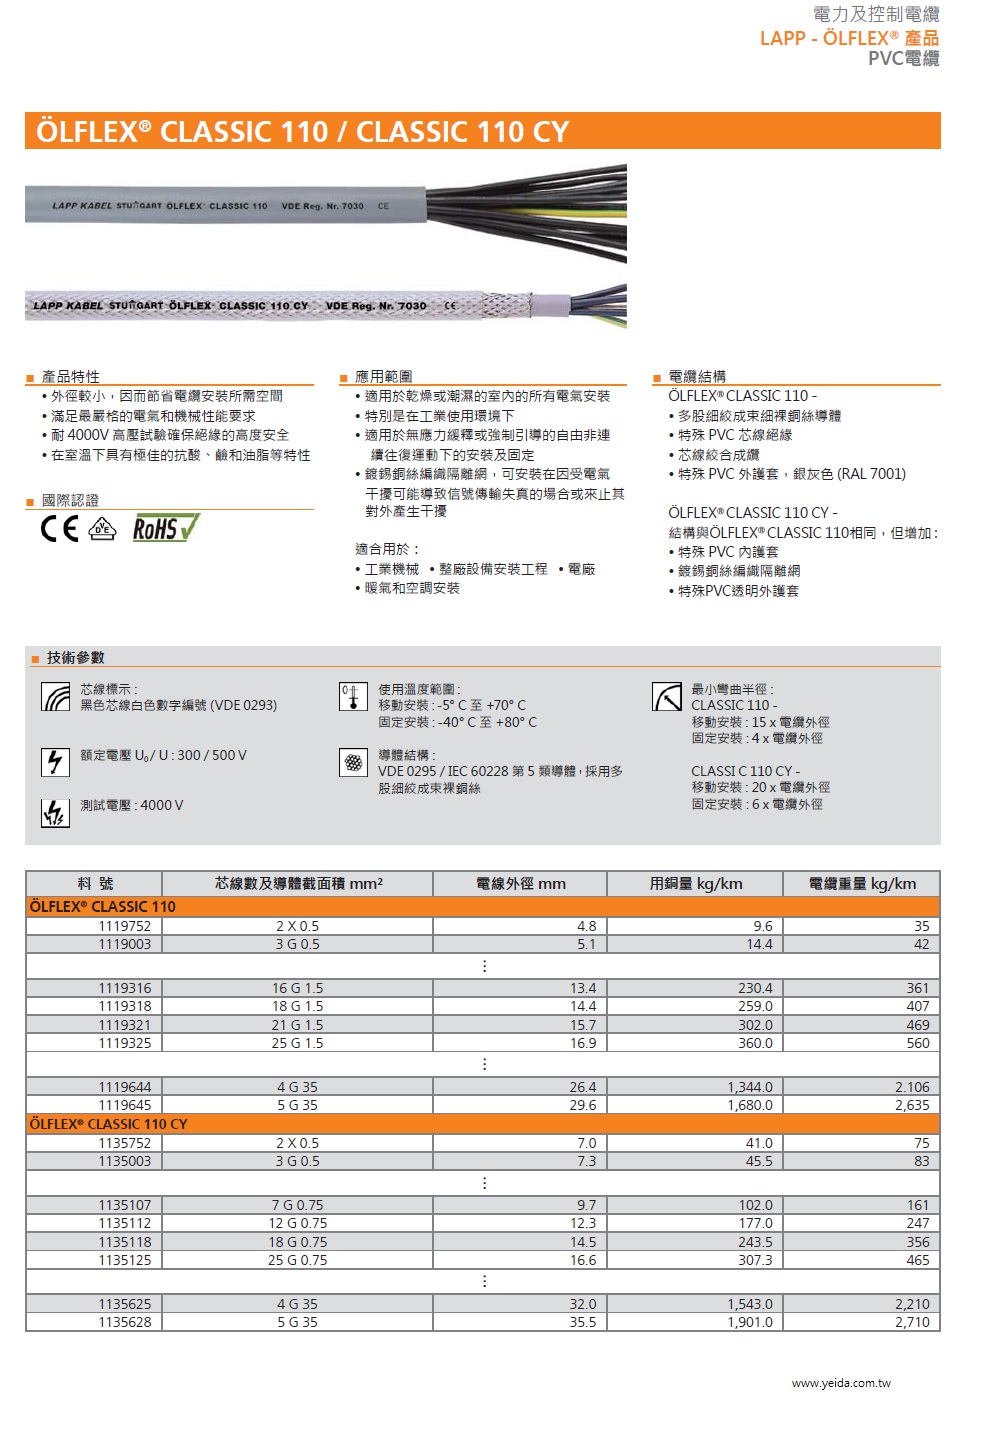 LAPP  ÖLFLEX® CLASSIC 110CY 工業級(銅網隔離)連接線4kV test voltage small cable diameters